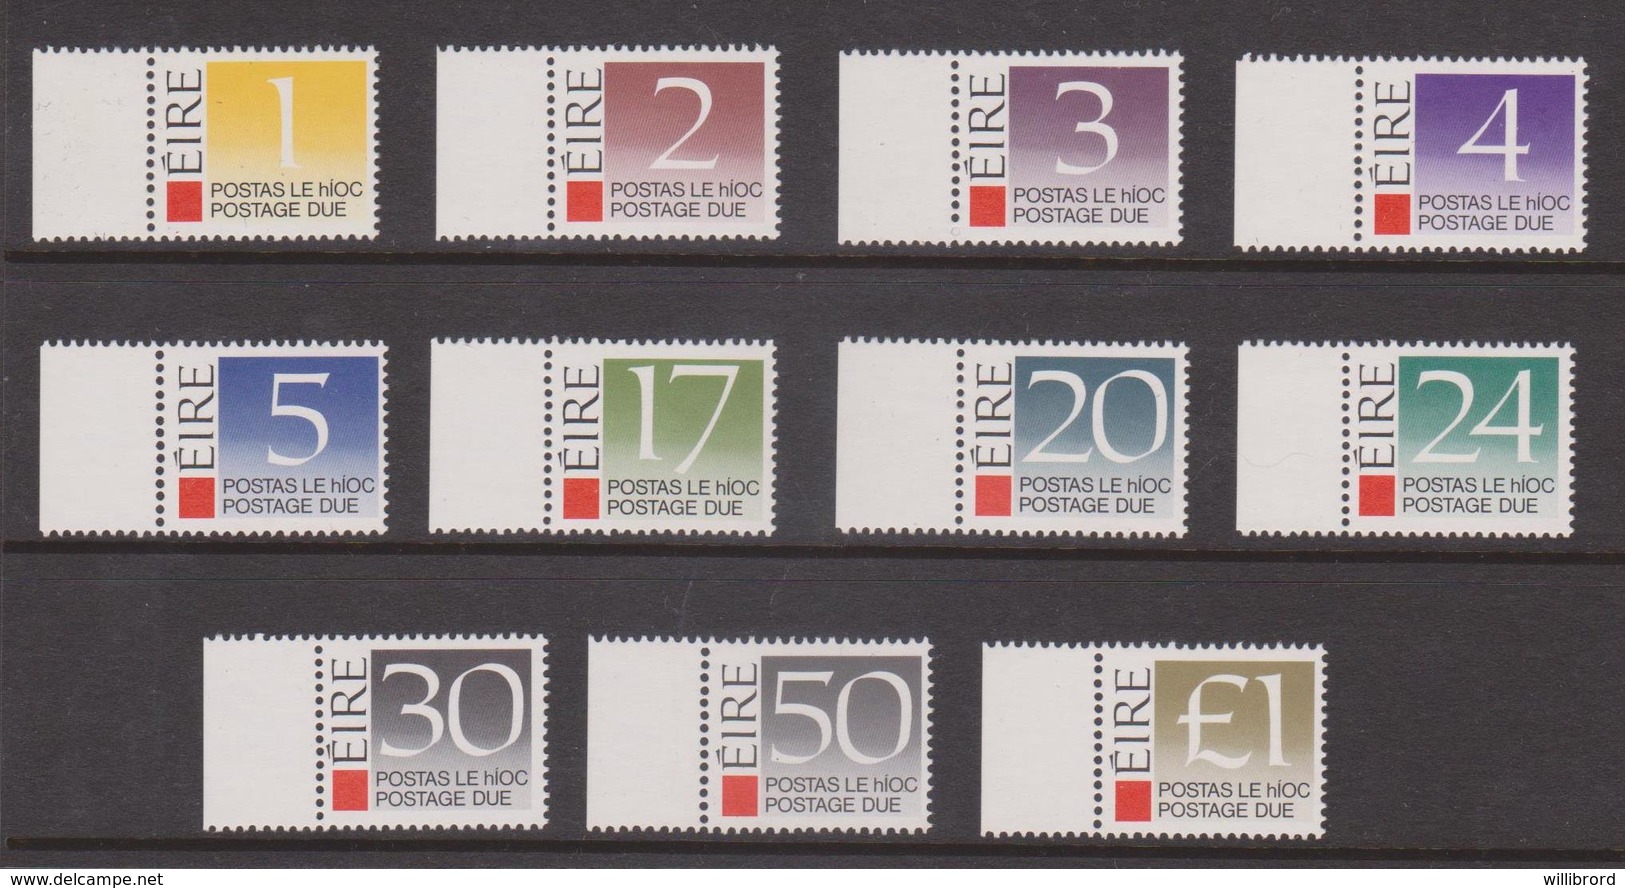 IRELAND - 1988 Postage Due Cplt Set Of 11 - Mint Never Hinged - Pristine - Portomarken